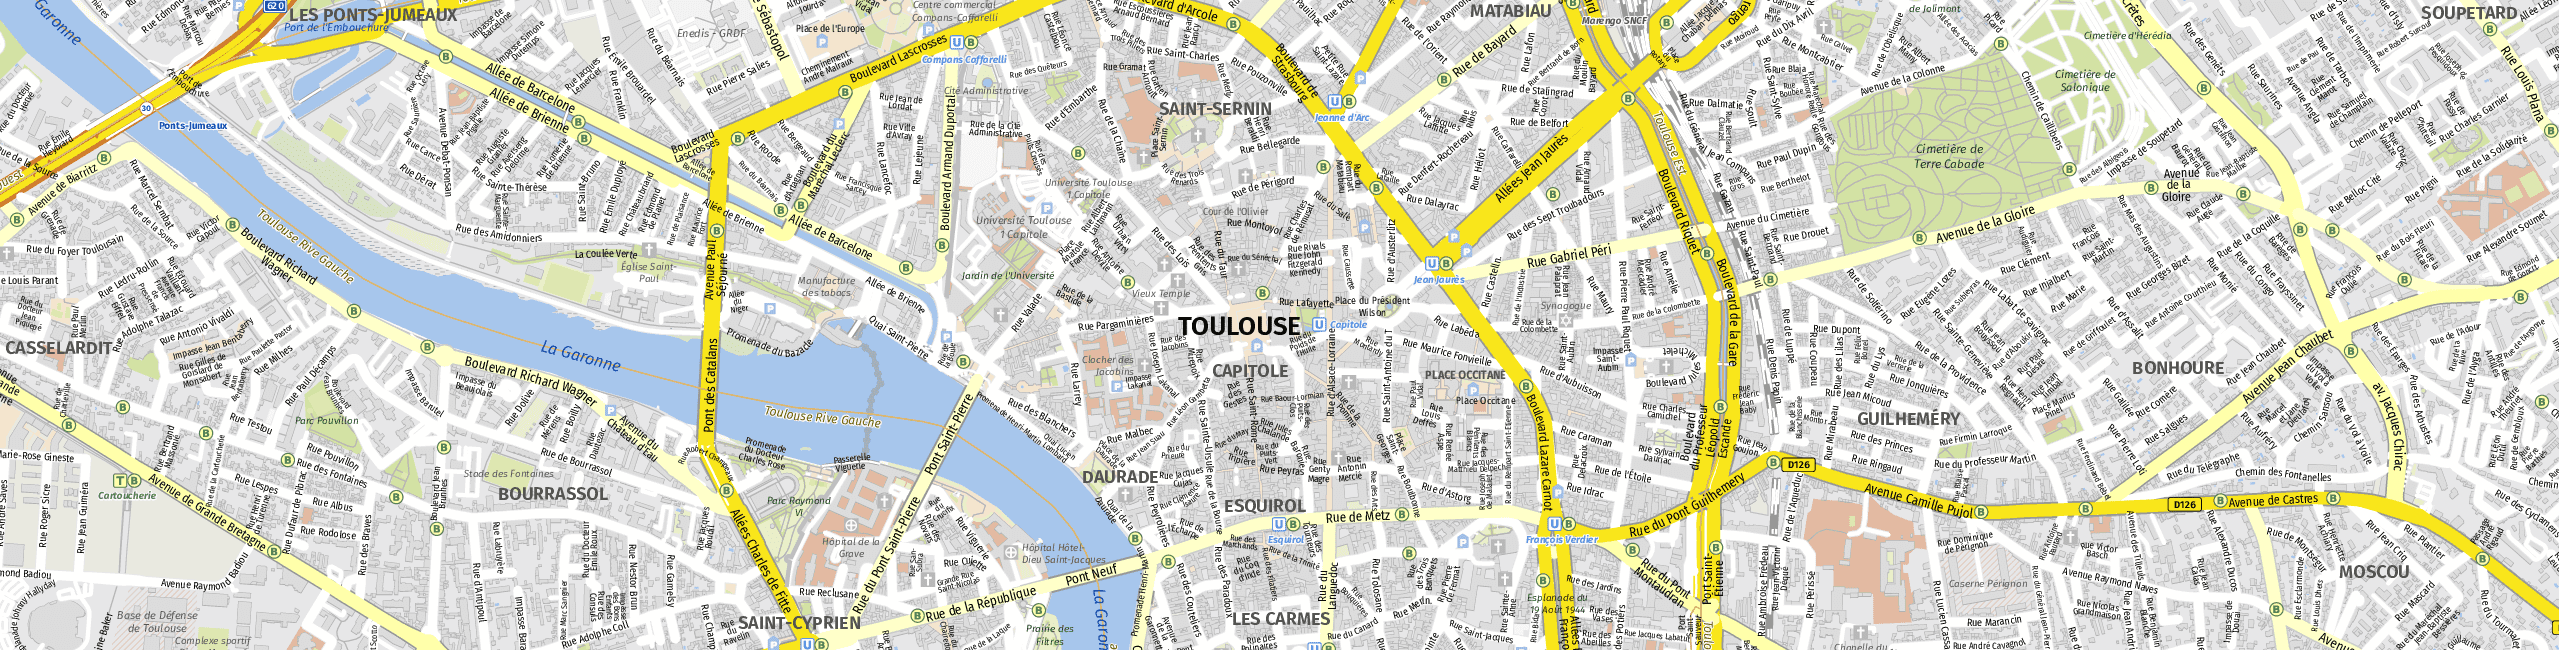 Stadtplan Toulouse zum Downloaden.